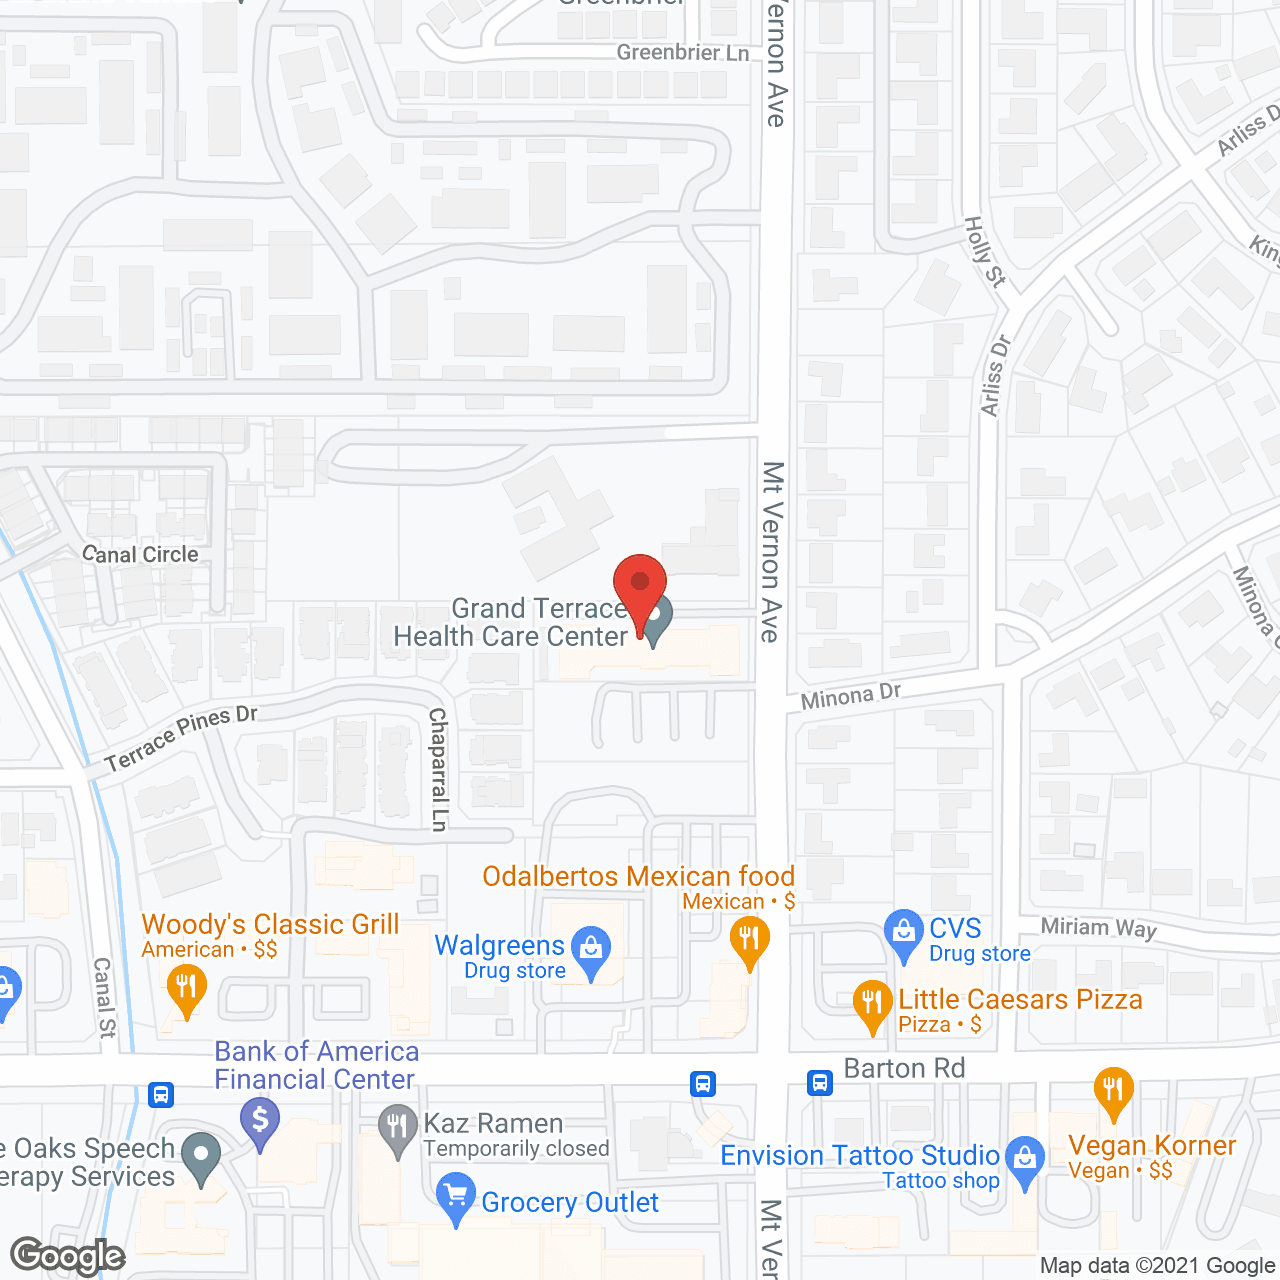 Grand Terrace Health Care Center in google map